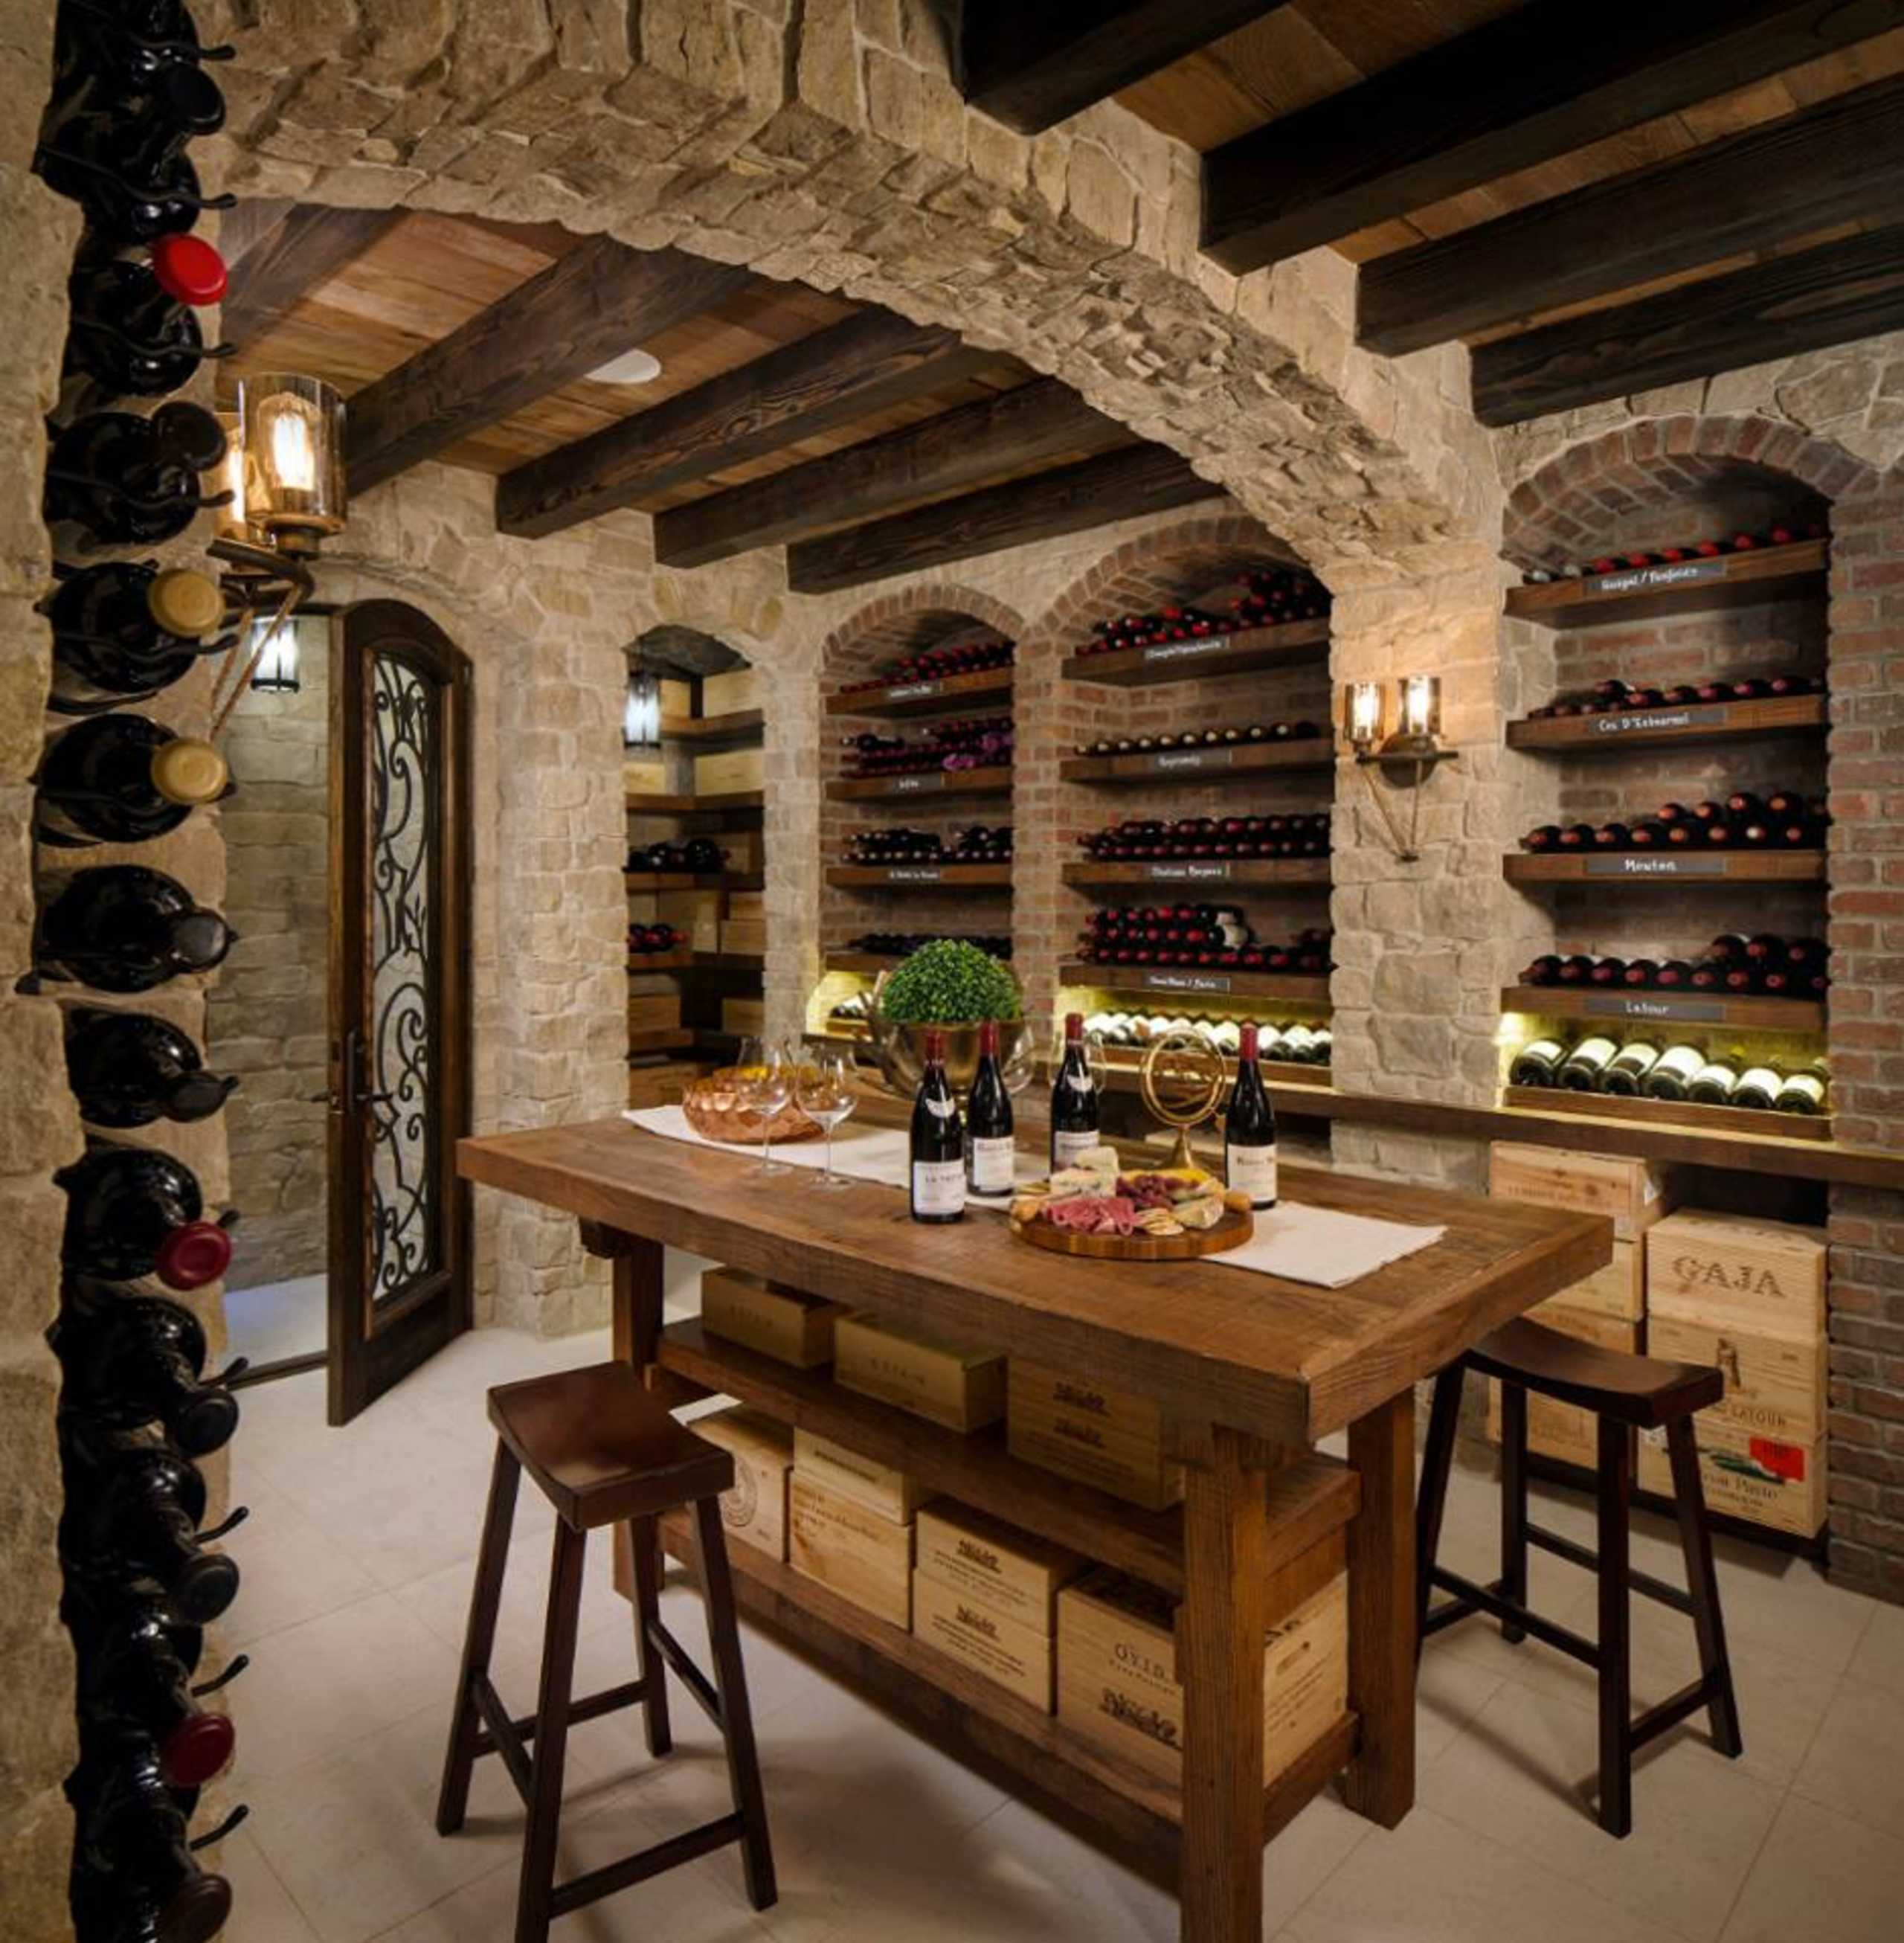 Do you need a wine cellar?